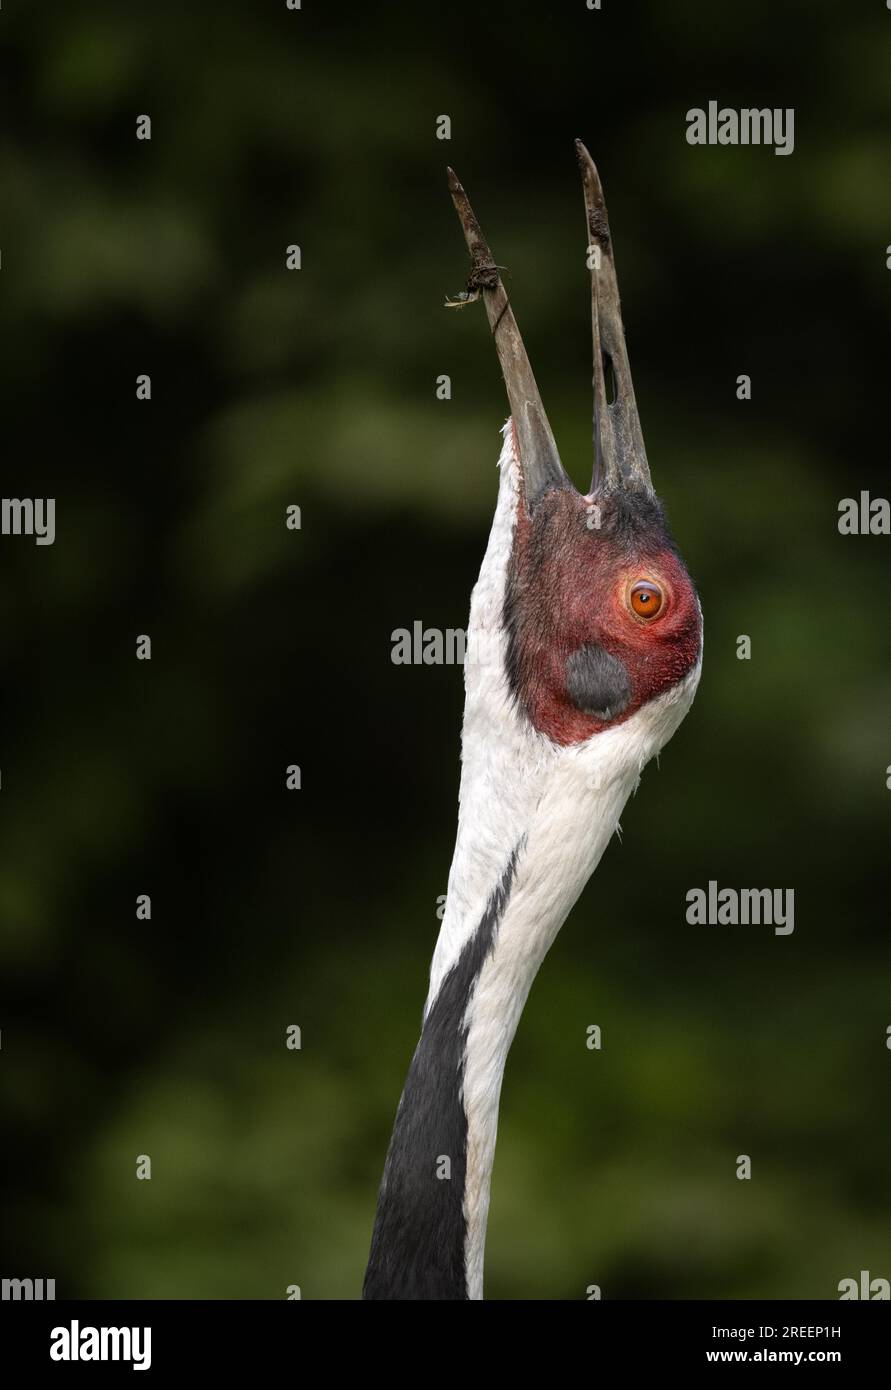 White-naped crane (Grus vipio), animal portrait, captive, calls, Germany Stock Photo